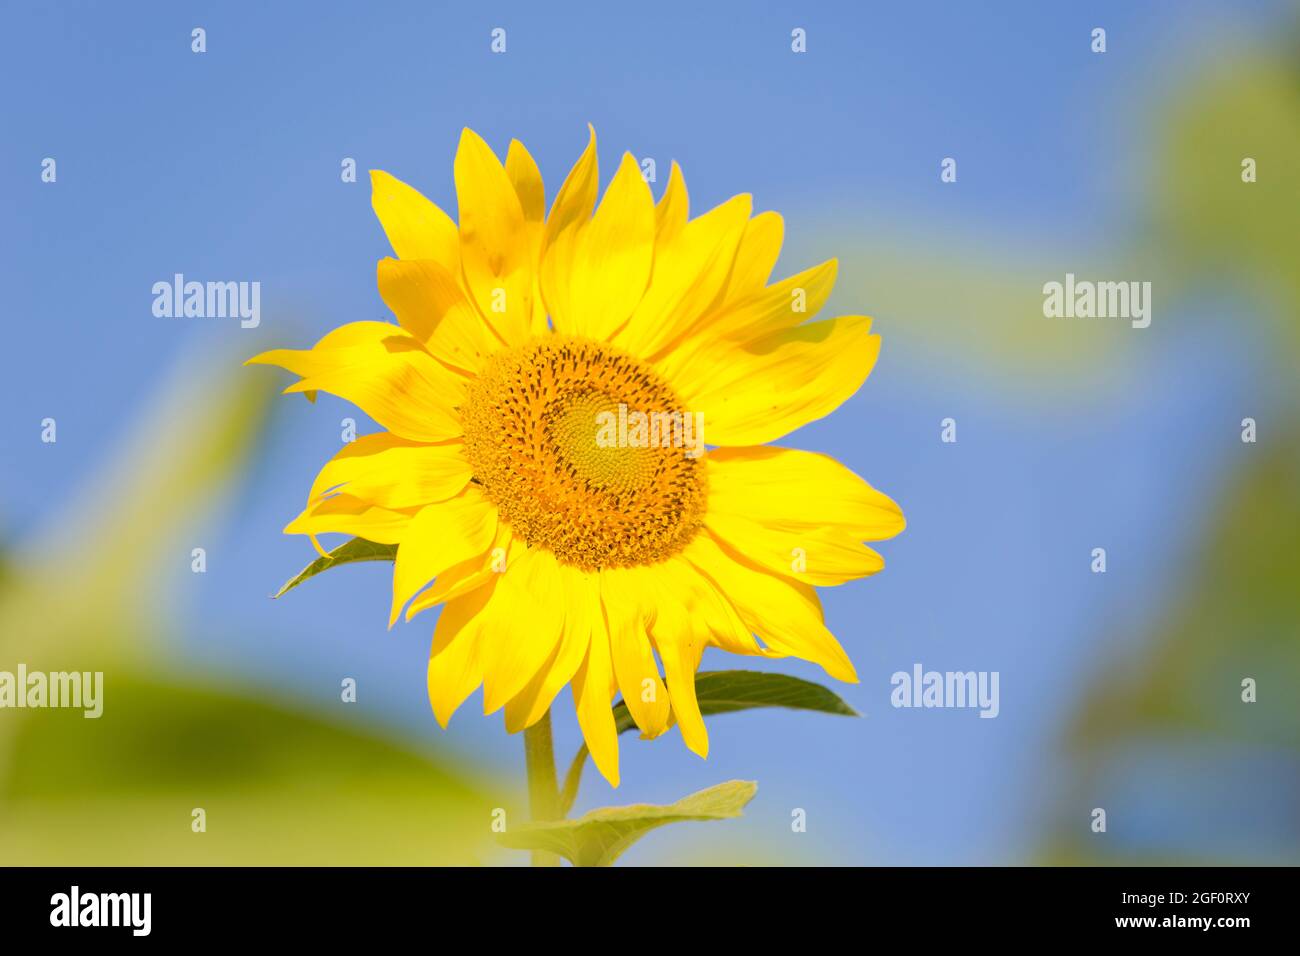 Flowerhead of a yellow sunflower against  blue sky - selective focus Stock Photo